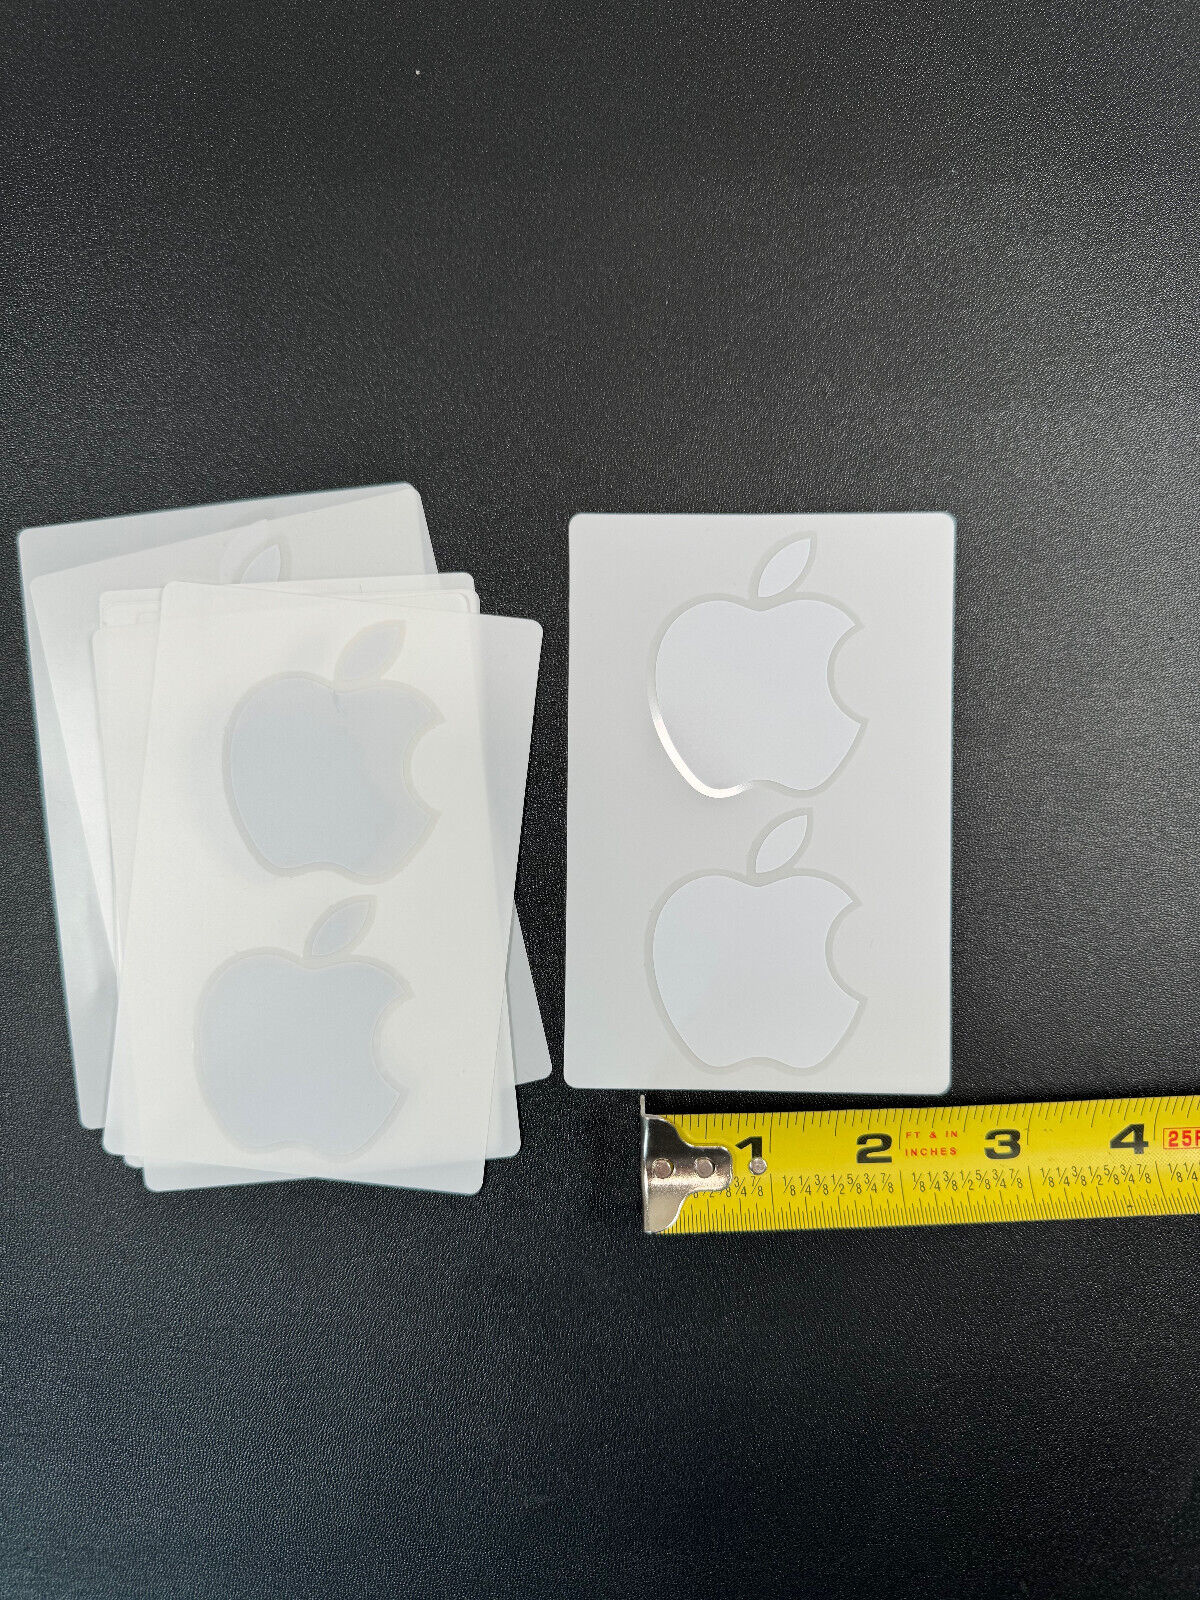 Apple Logo Sticker/Decal - White - Pick you own size